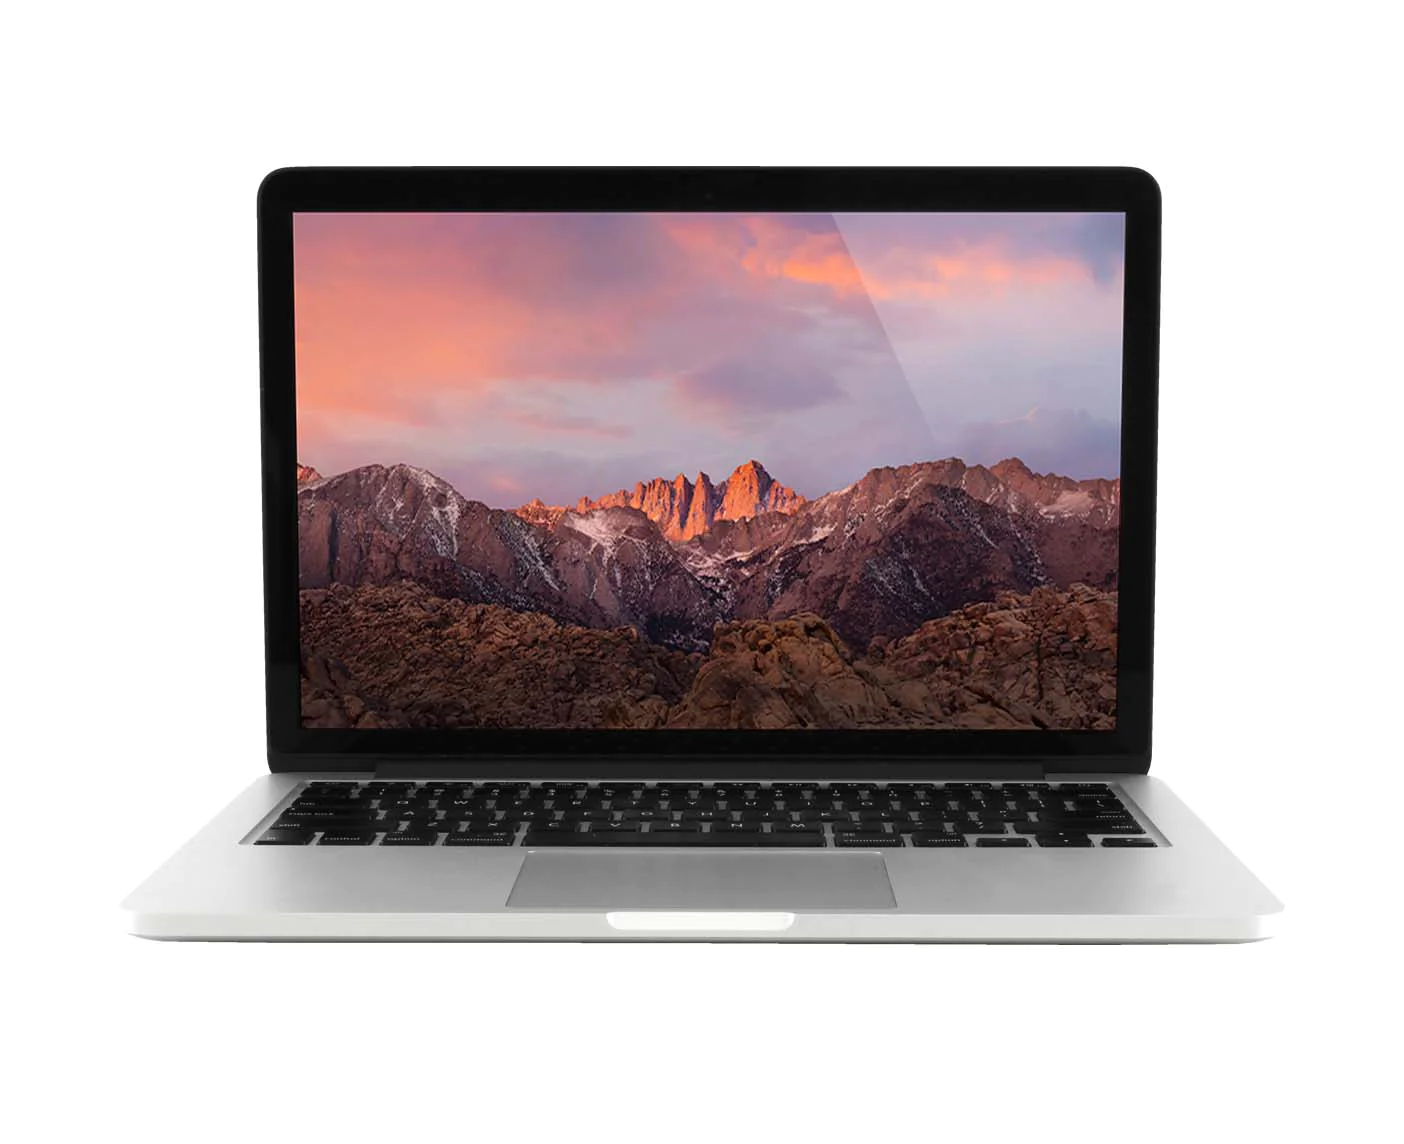 Apple MacBook Pro 13-inch Retina Display (Late 2013)  Notebook